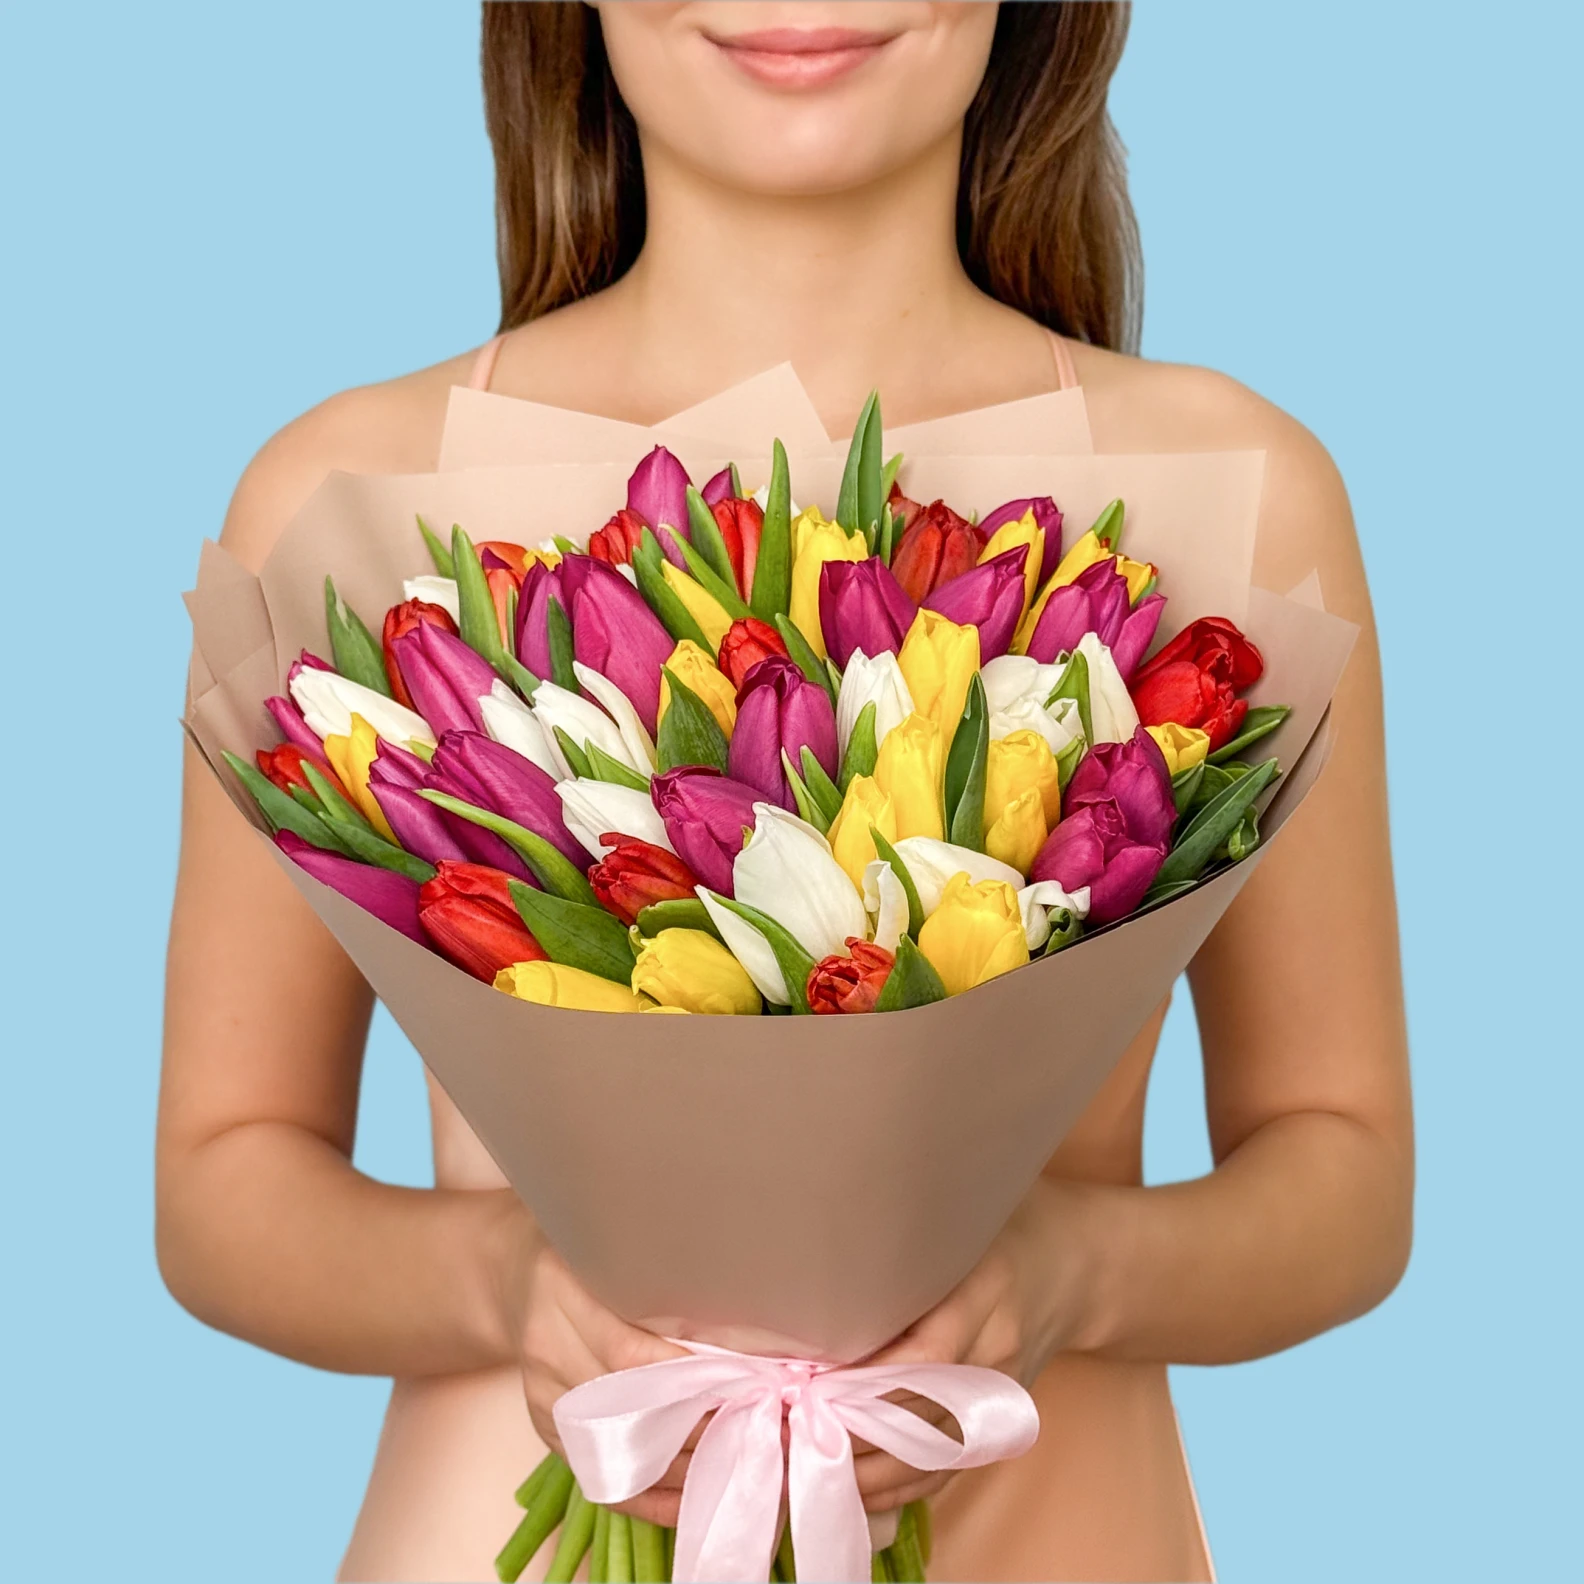 70 Mixed Tulips - image №1